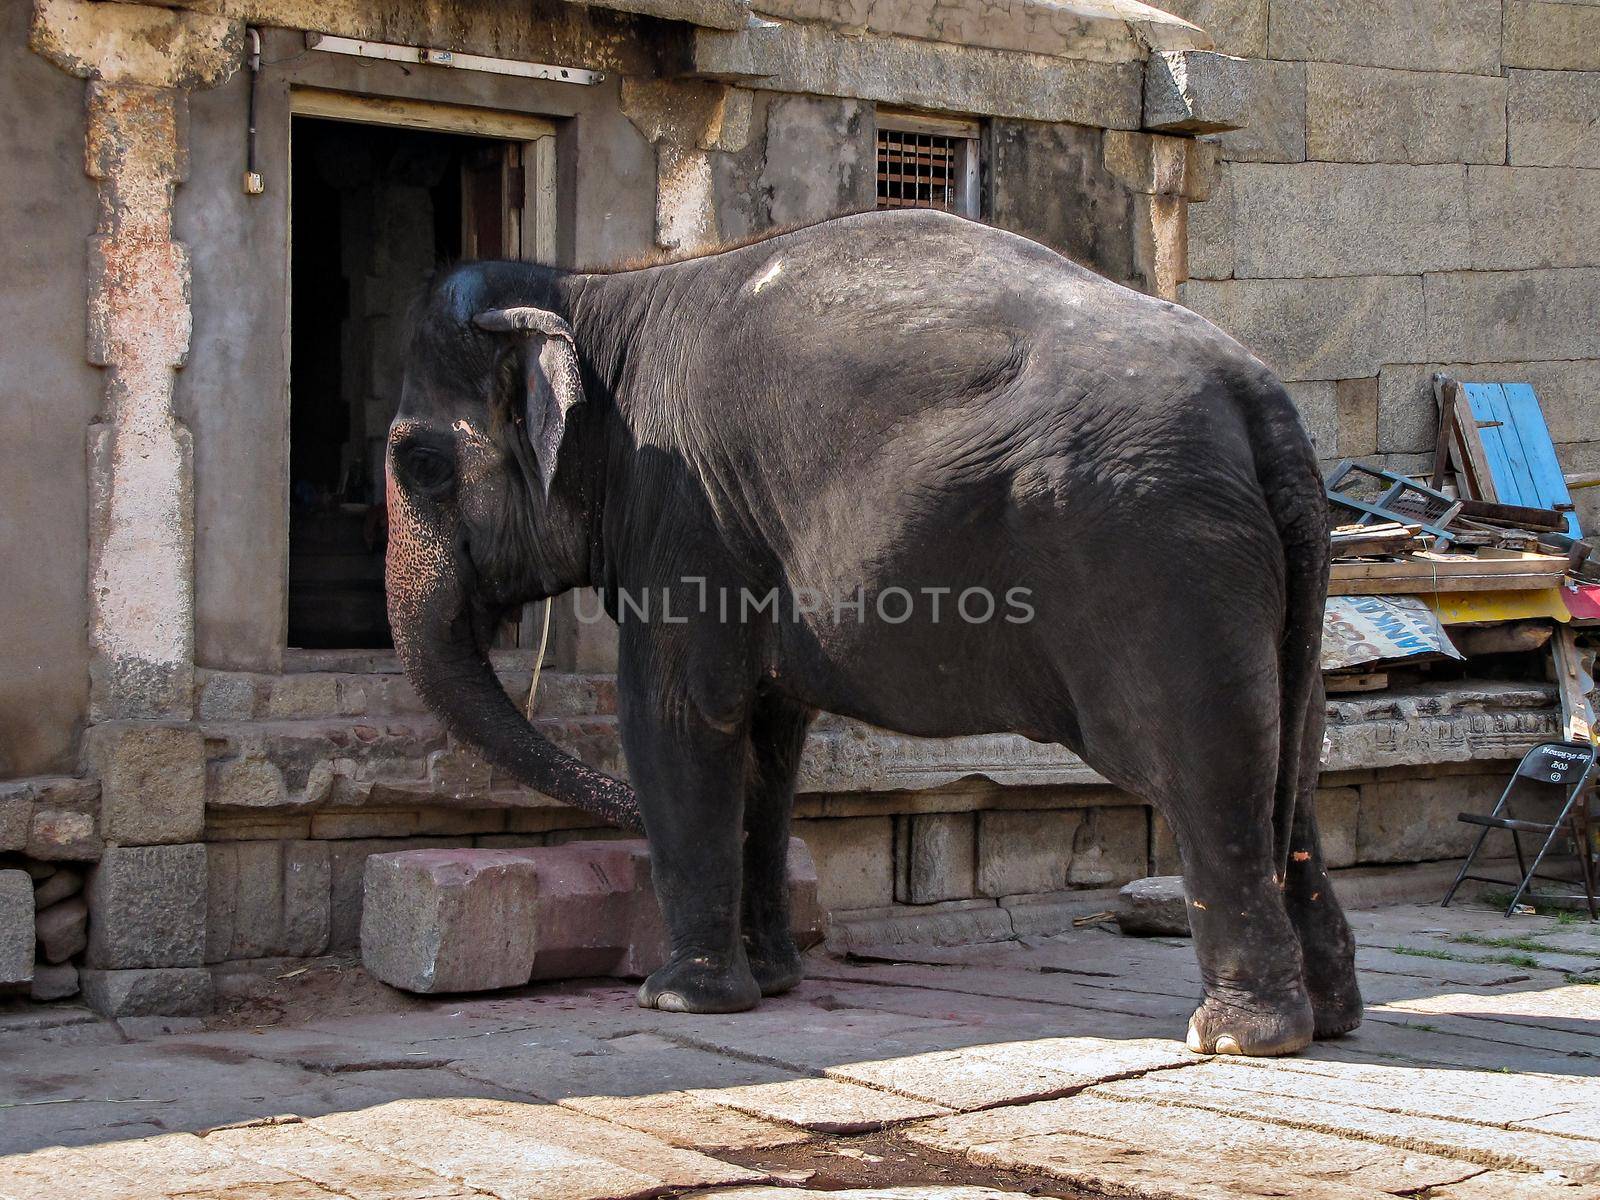 Virupaksha temple elephant inside the temple complex at Hampi by lalam